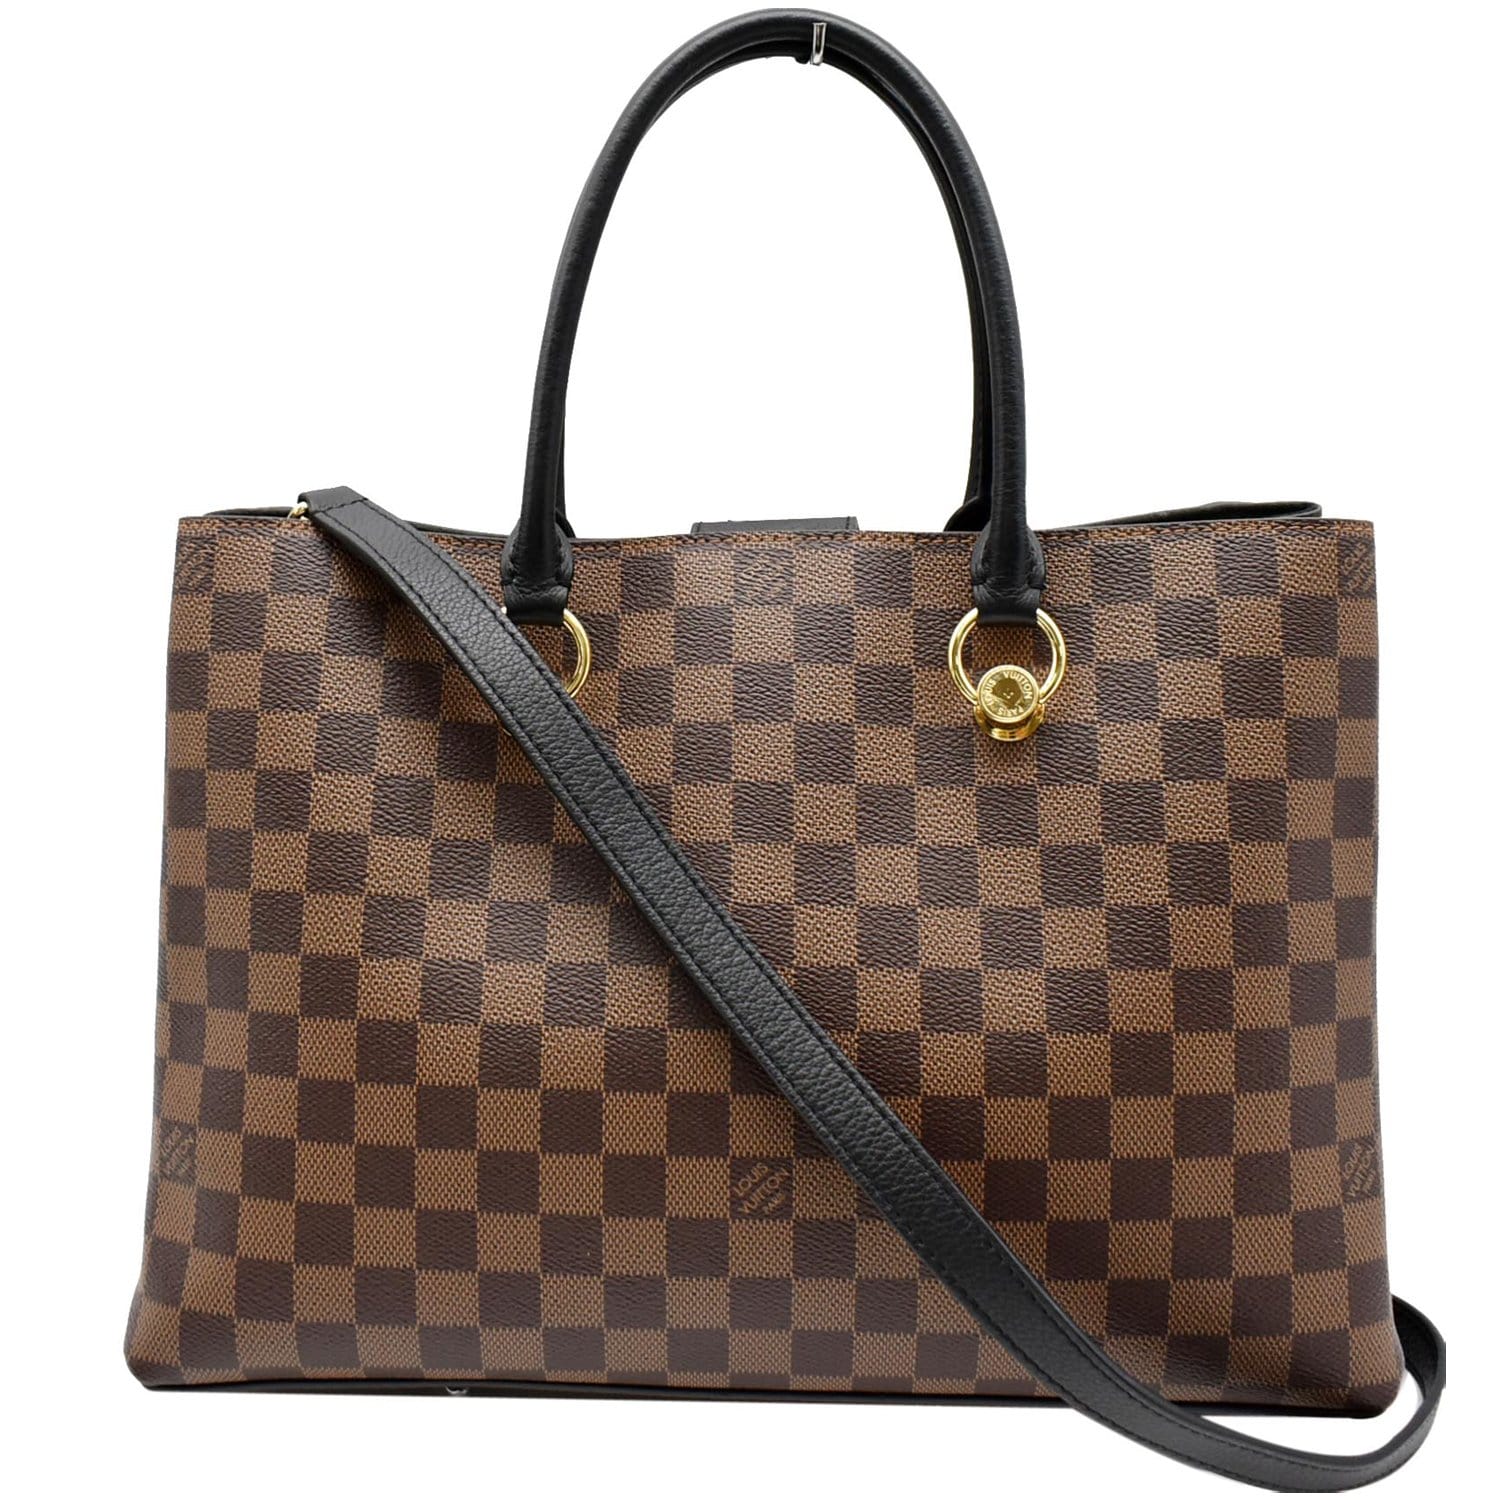 Louis Vuitton Lv Hand Bag Black Damier